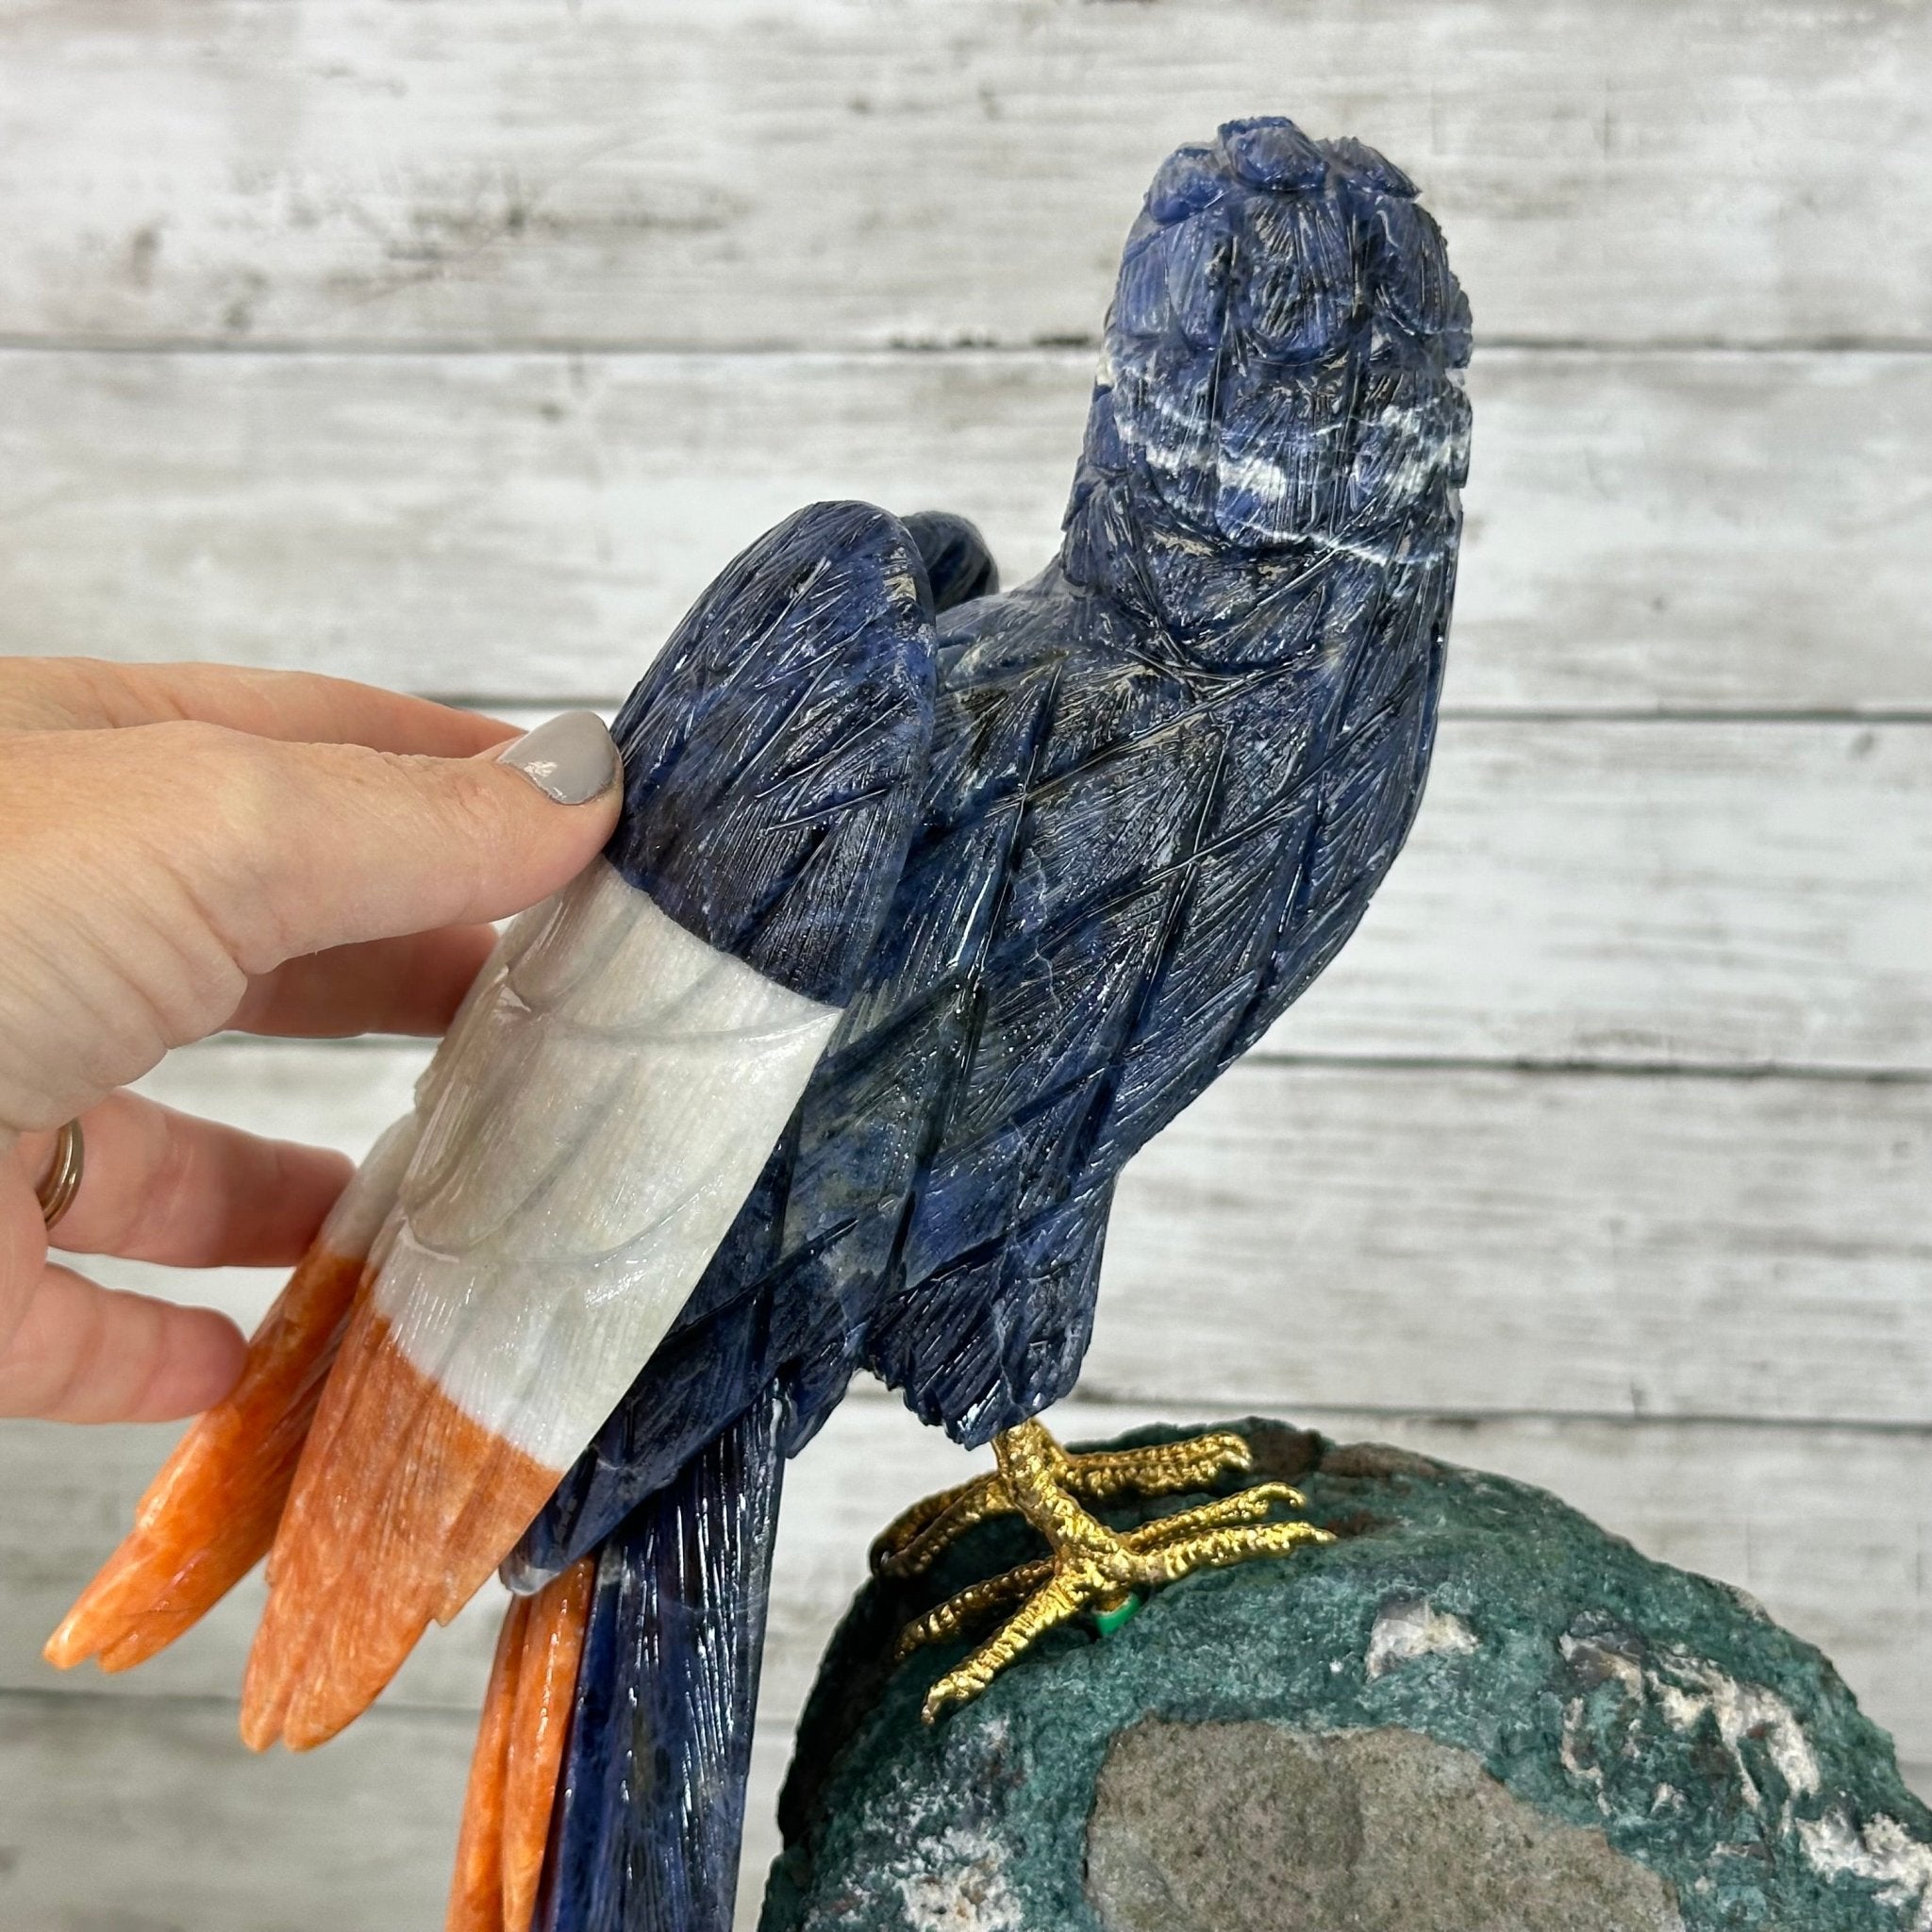 Extra Large Hand-Carved Sodalite Macaw Bird on an Amethyst Base, 17.7" Tall #3006-SOMAM-004 - Brazil GemsBrazil GemsExtra Large Hand-Carved Sodalite Macaw Bird on an Amethyst Base, 17.7" Tall #3006-SOMAM-004Crystal Birds3006-SOMAM-004